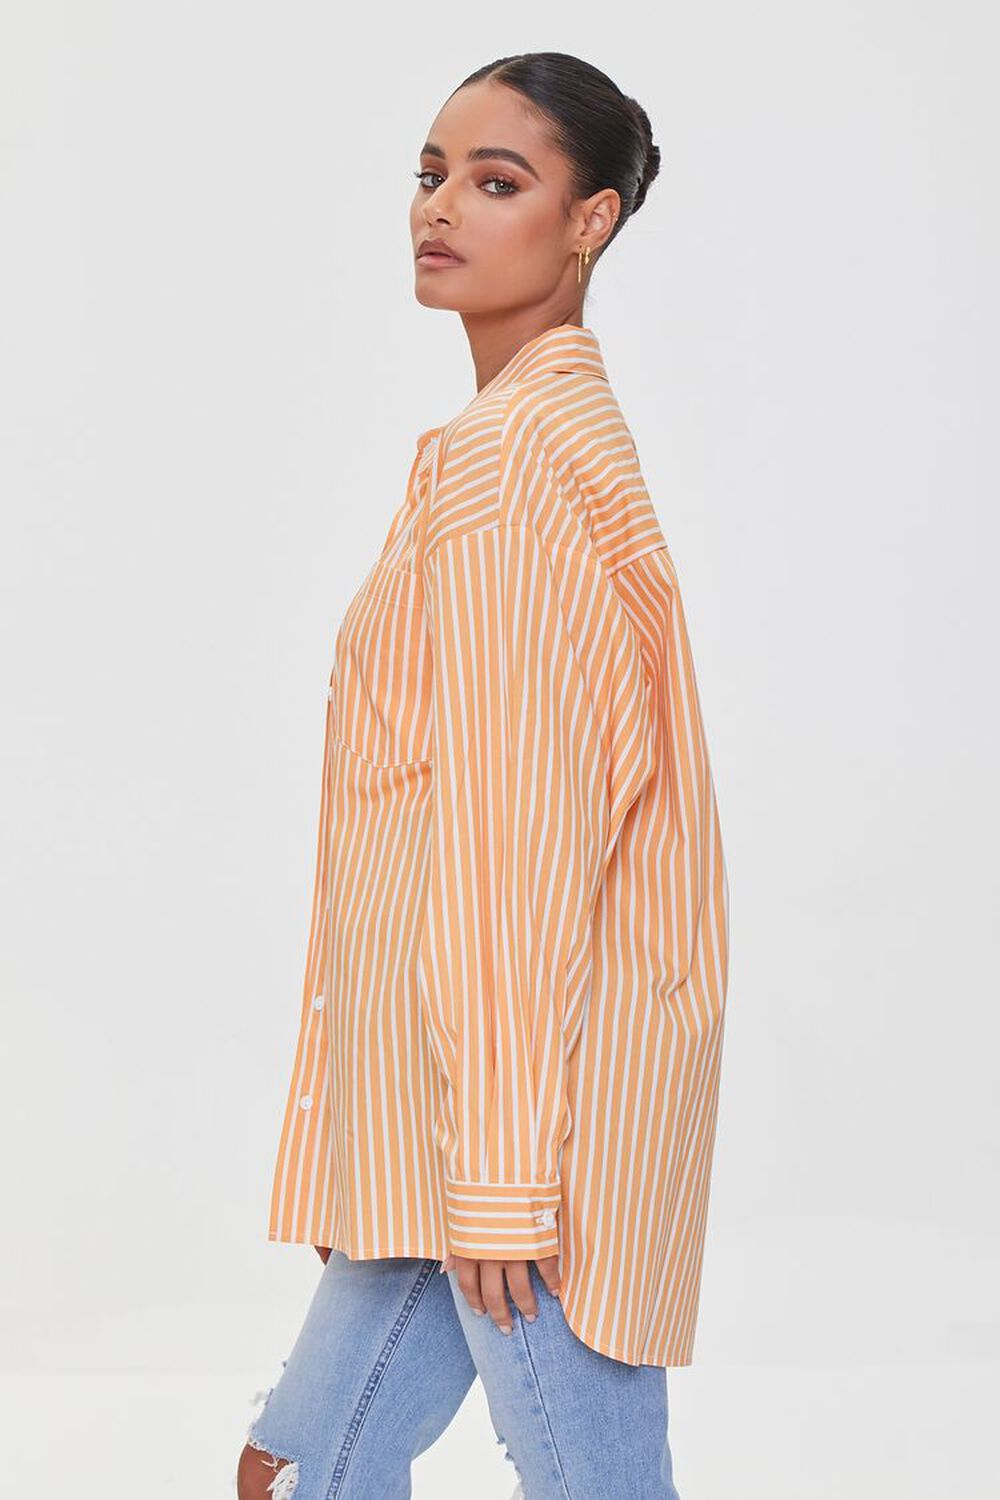 ORANGE/WHITE Striped Poplin Shirt, image 2